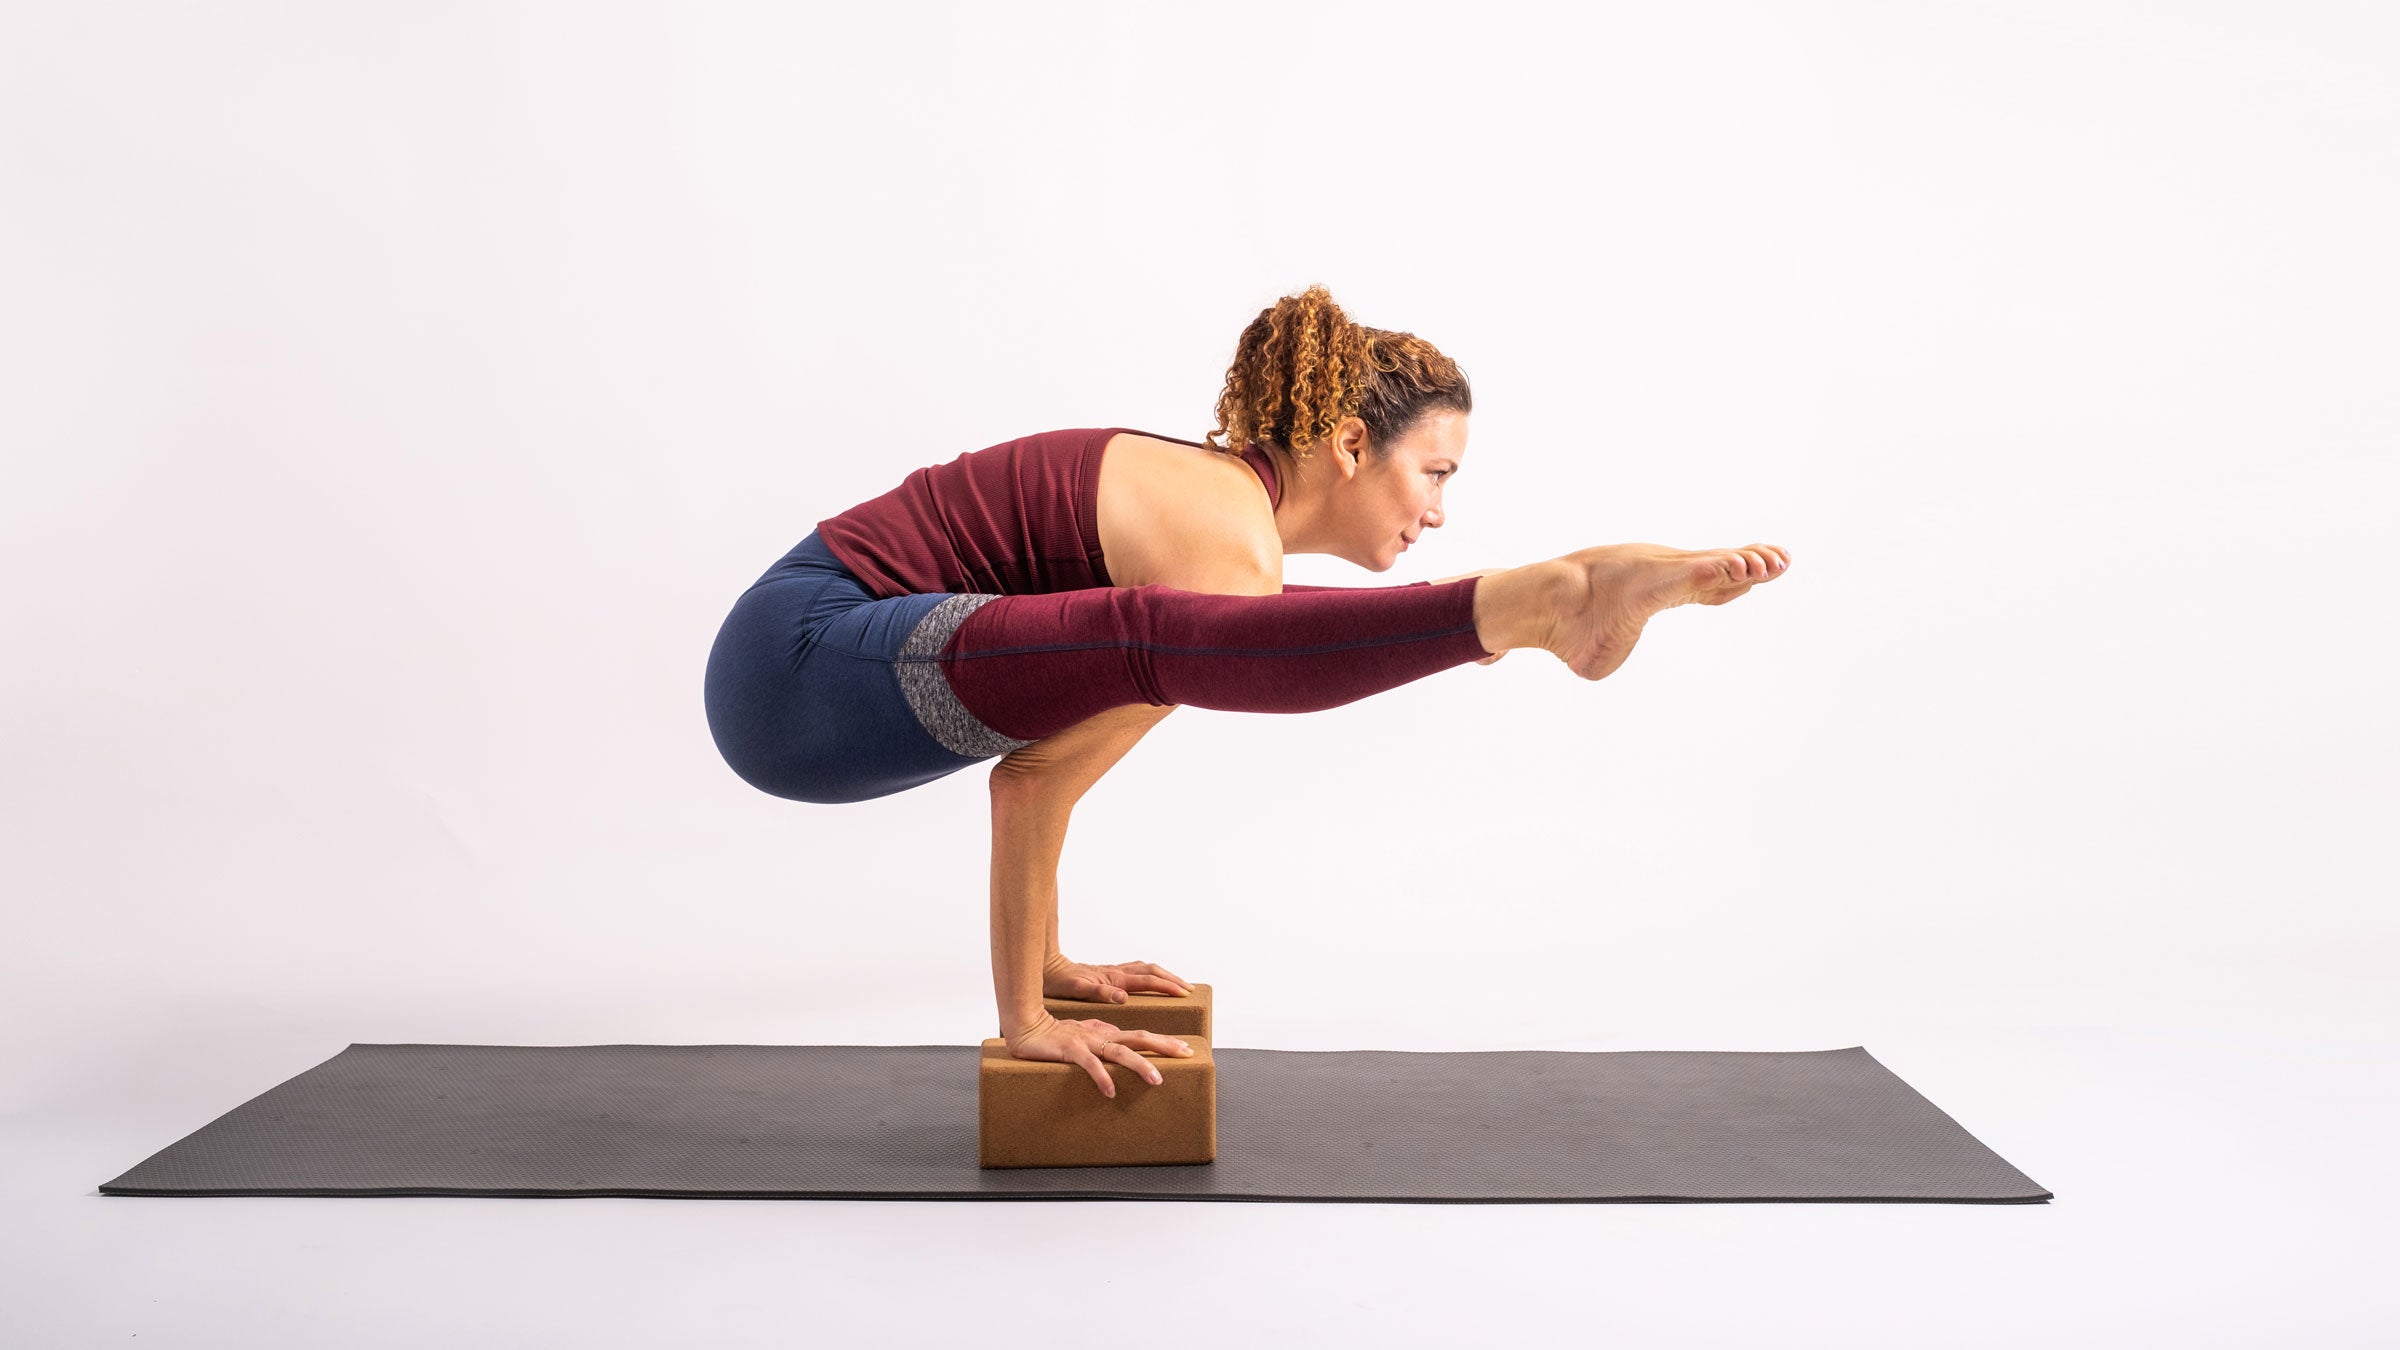 Premium Photo | Beautiful woman practices handstand yoga asana tittibhasana  - firefly pose at the yoga studio